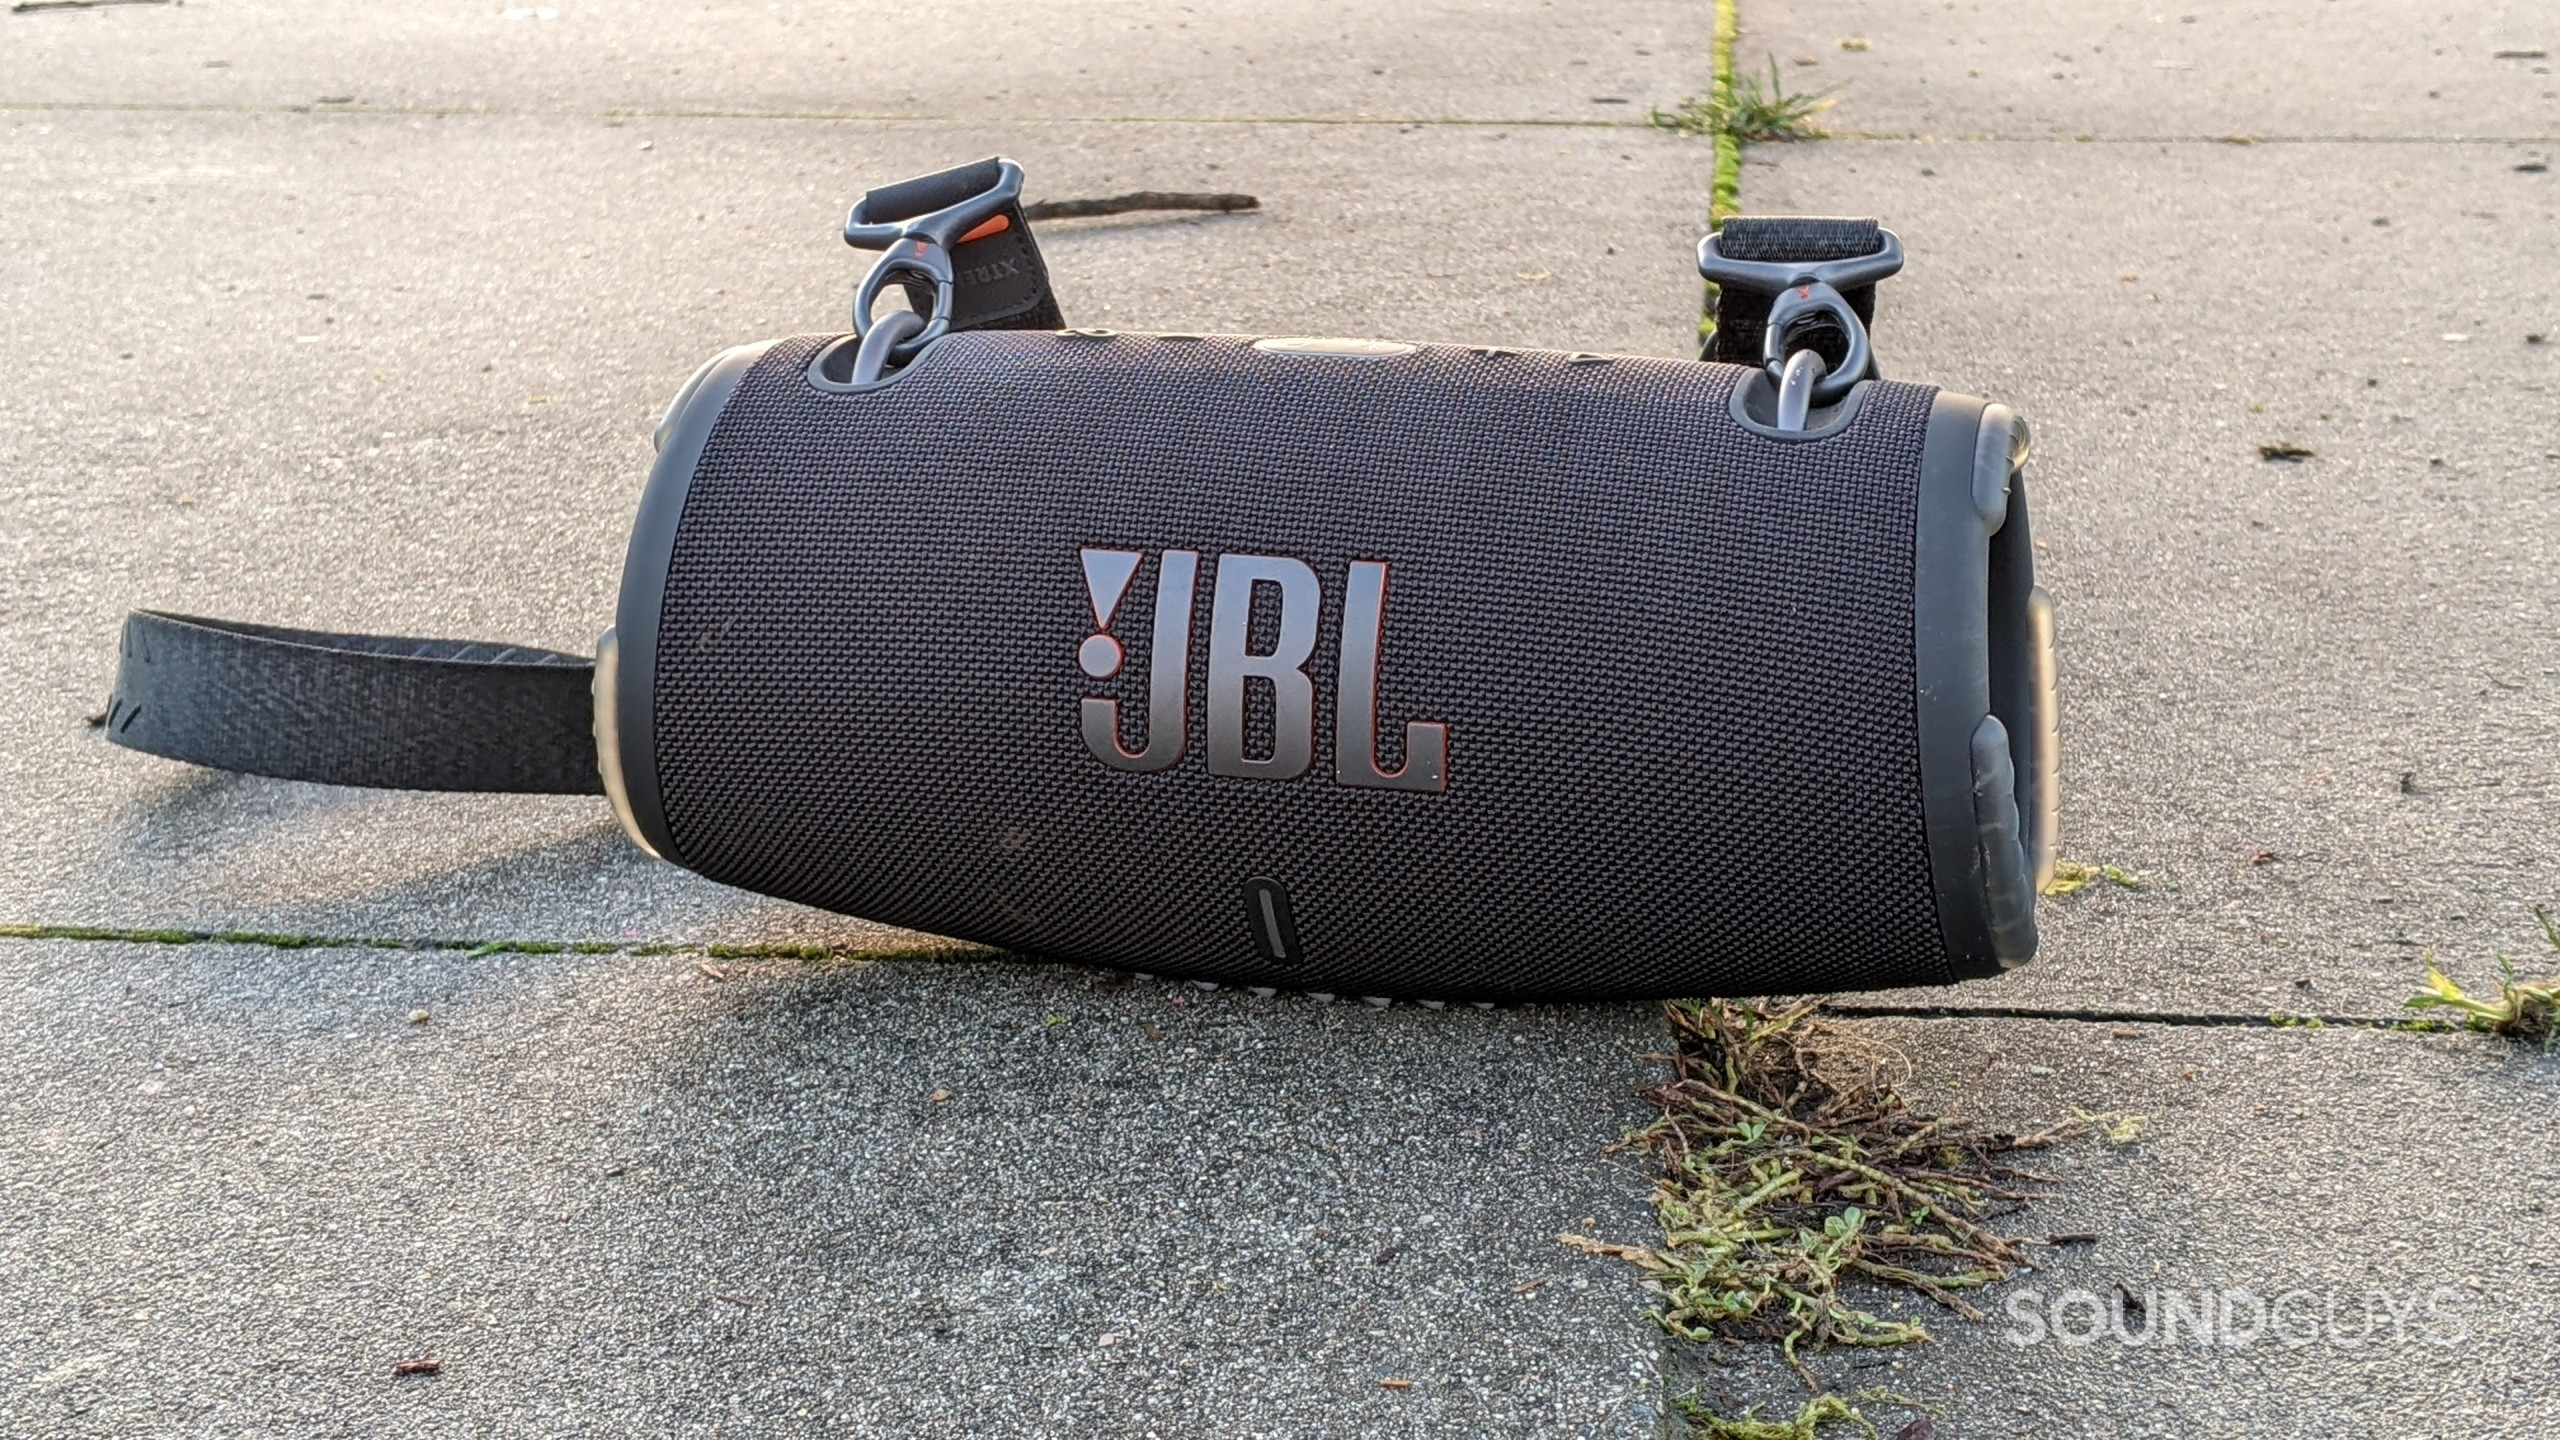 JBL 3 review: loud, not so portable - SoundGuys